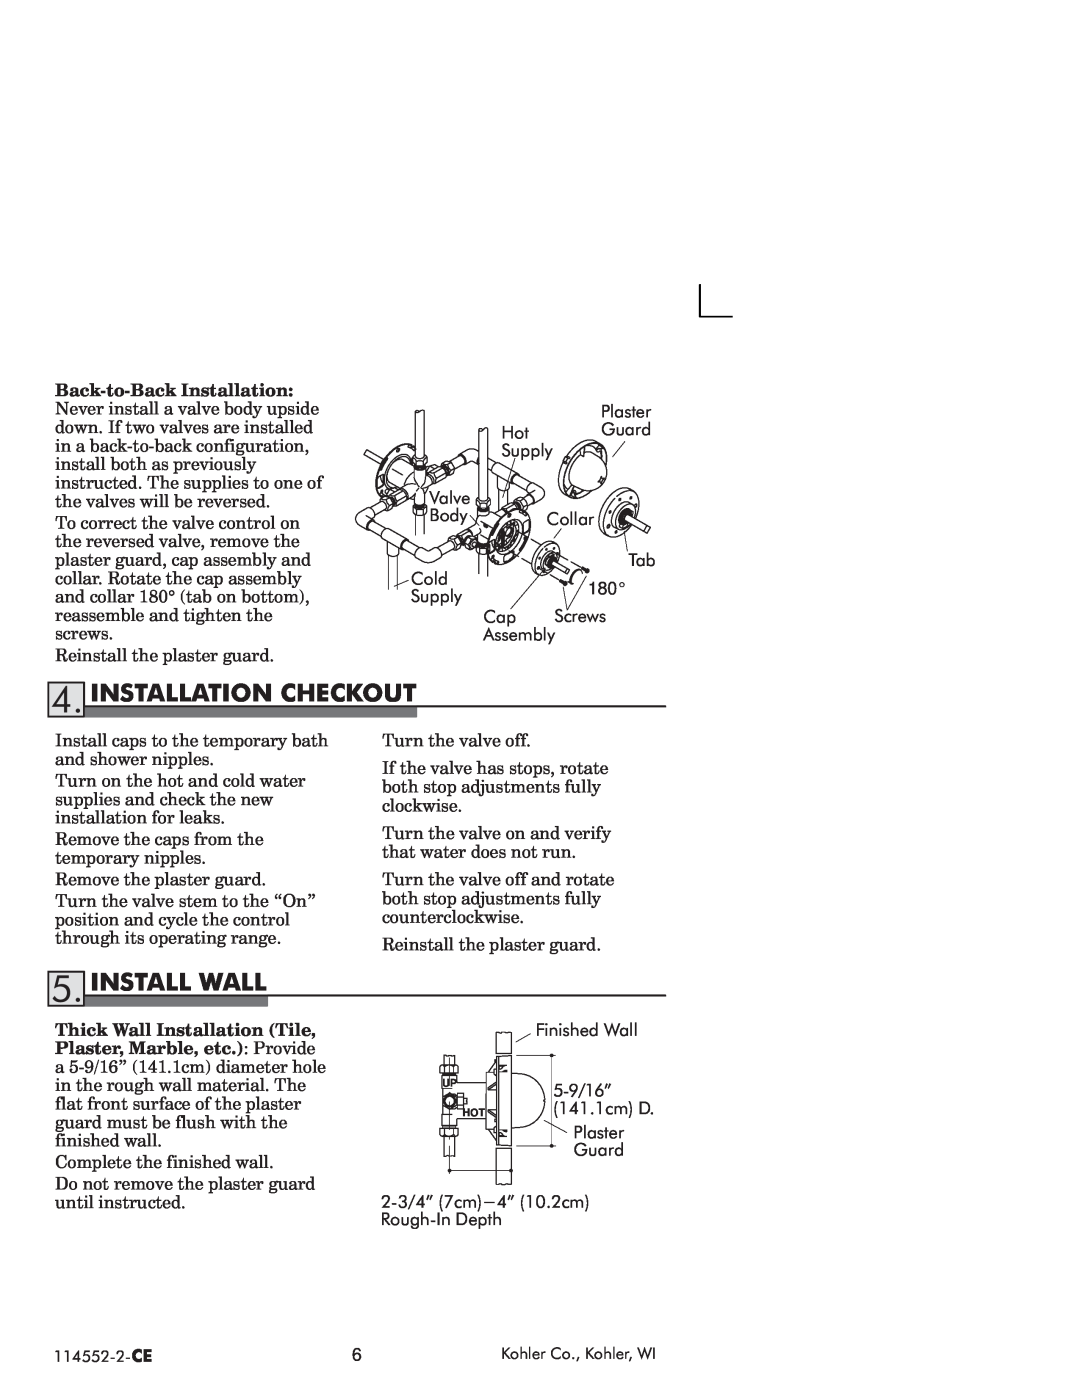 Kohler 114522-2-CE manual Installation Checkout, Install Wall 